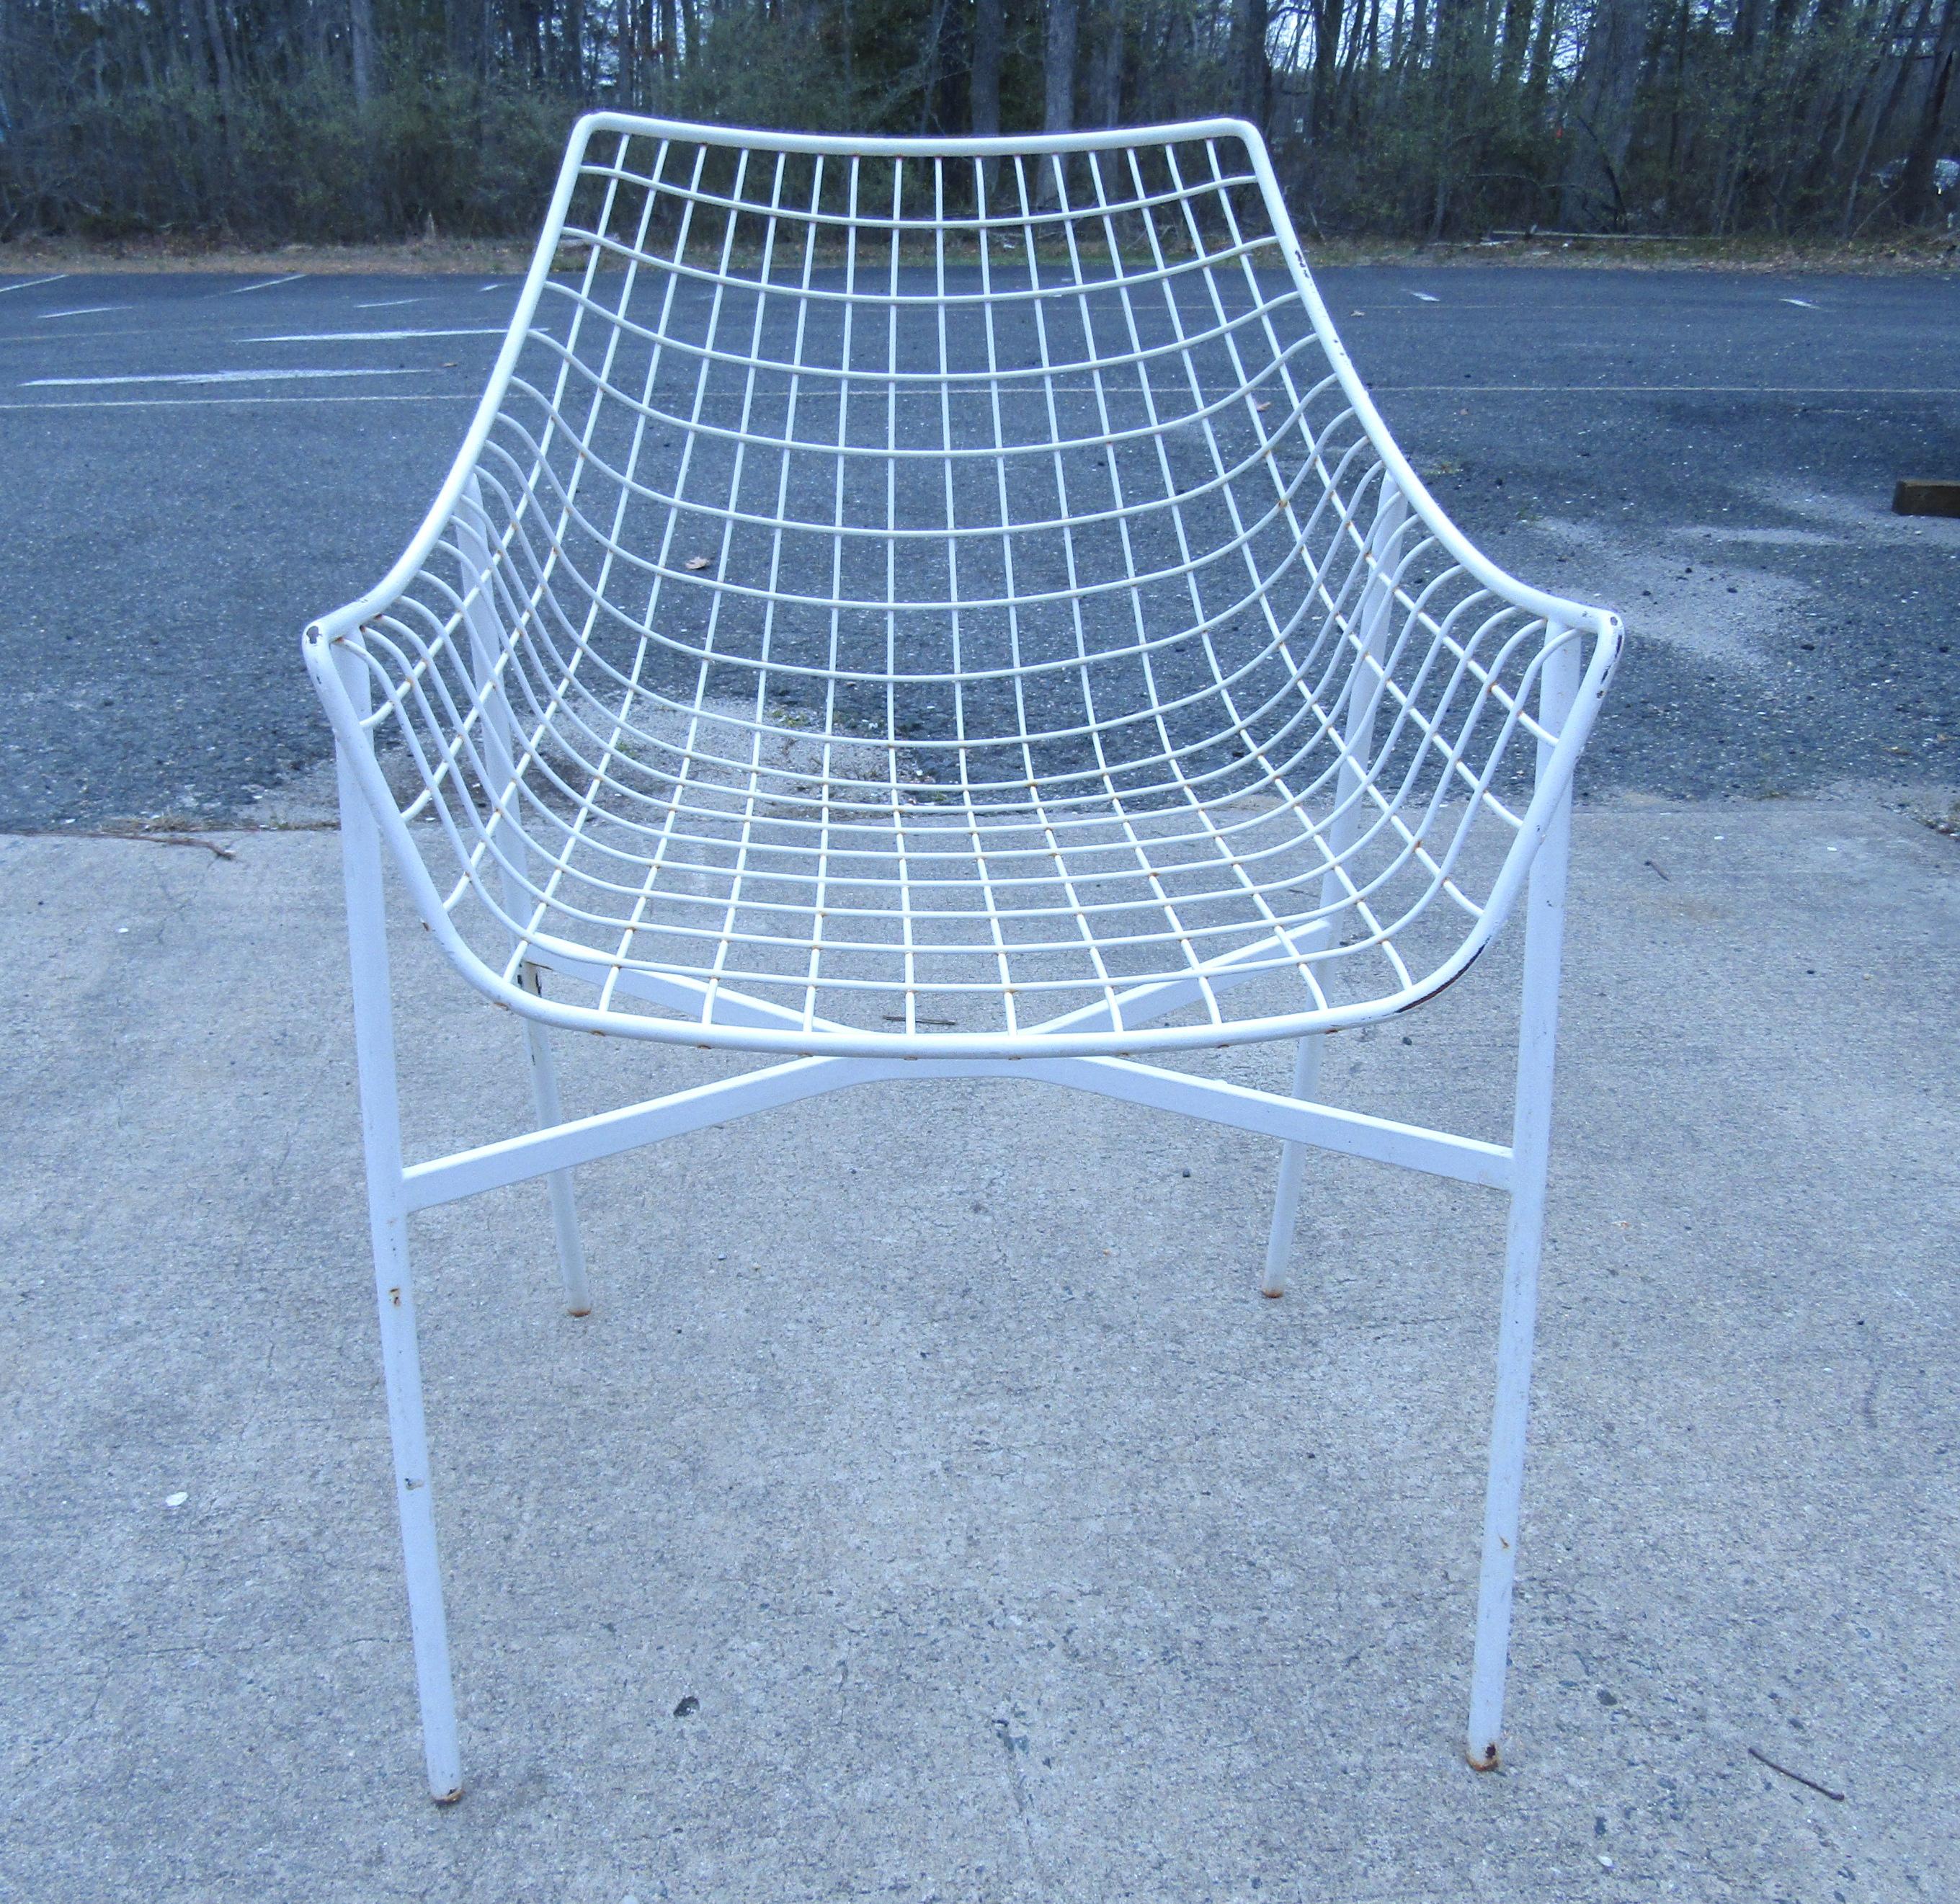 retro-inspired egg chair -china -b2b -forum -blog -wikipedia -.cn -.gov -alibaba